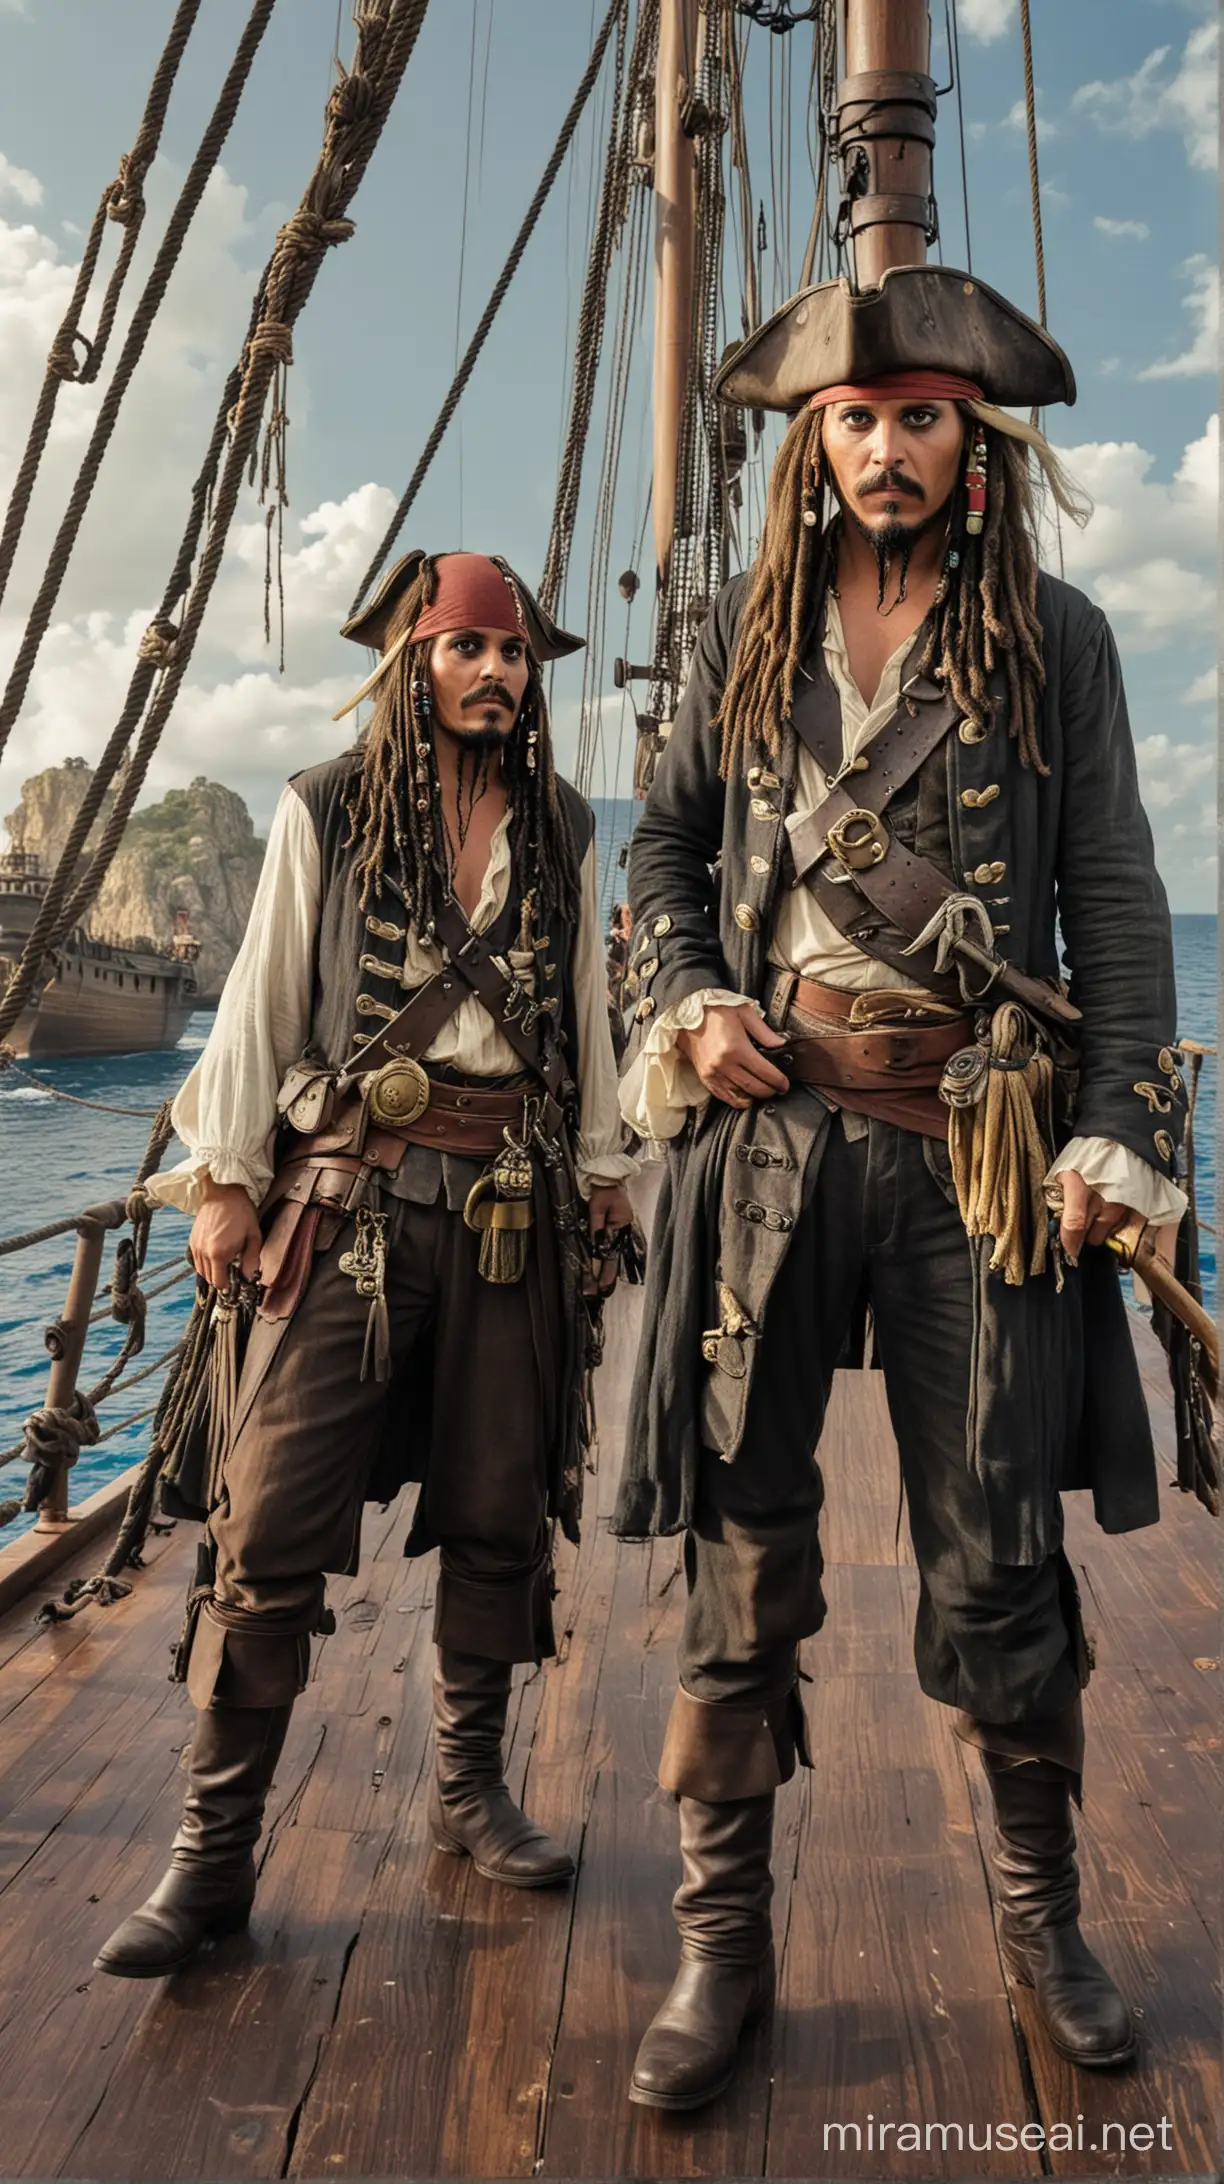 Adventurous Pirates Sailing the Caribbean Seas on a Ship